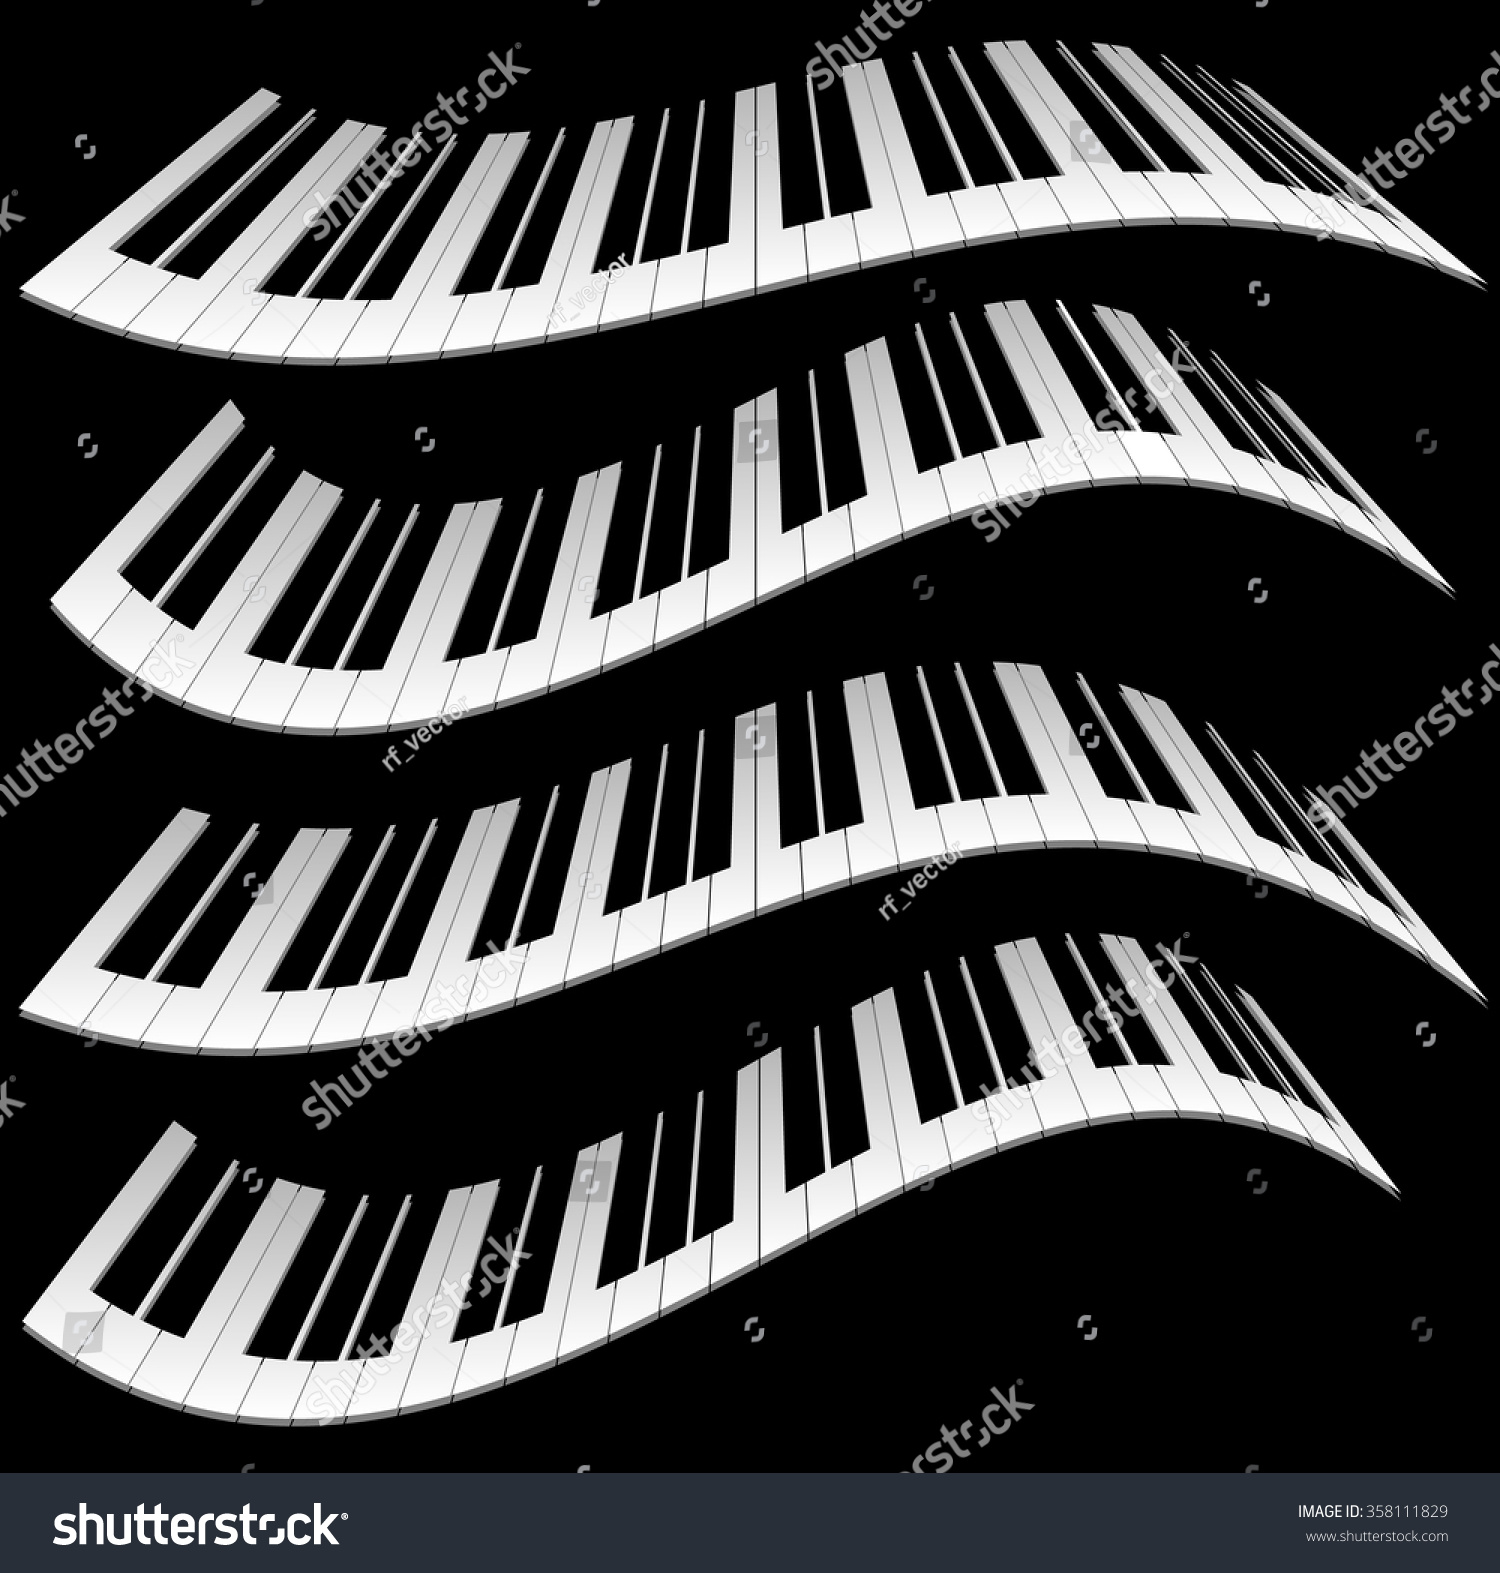 Piano Keys Keyboard Isolated Vector Illustration Stock Vector Royalty Free